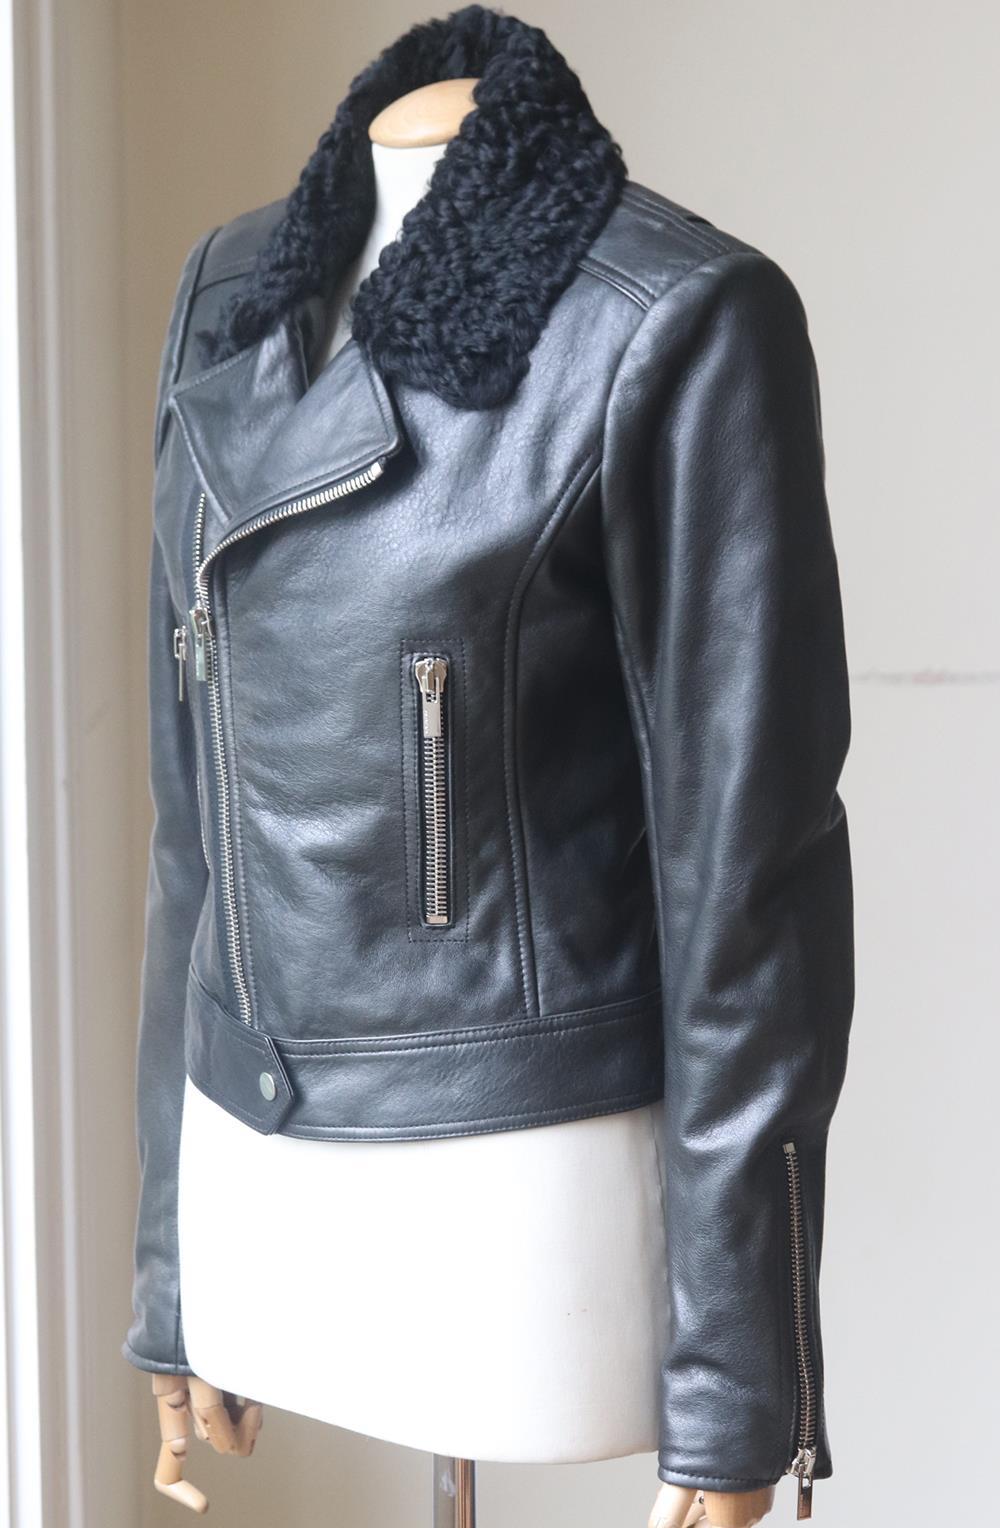 balenciaga leather jacket